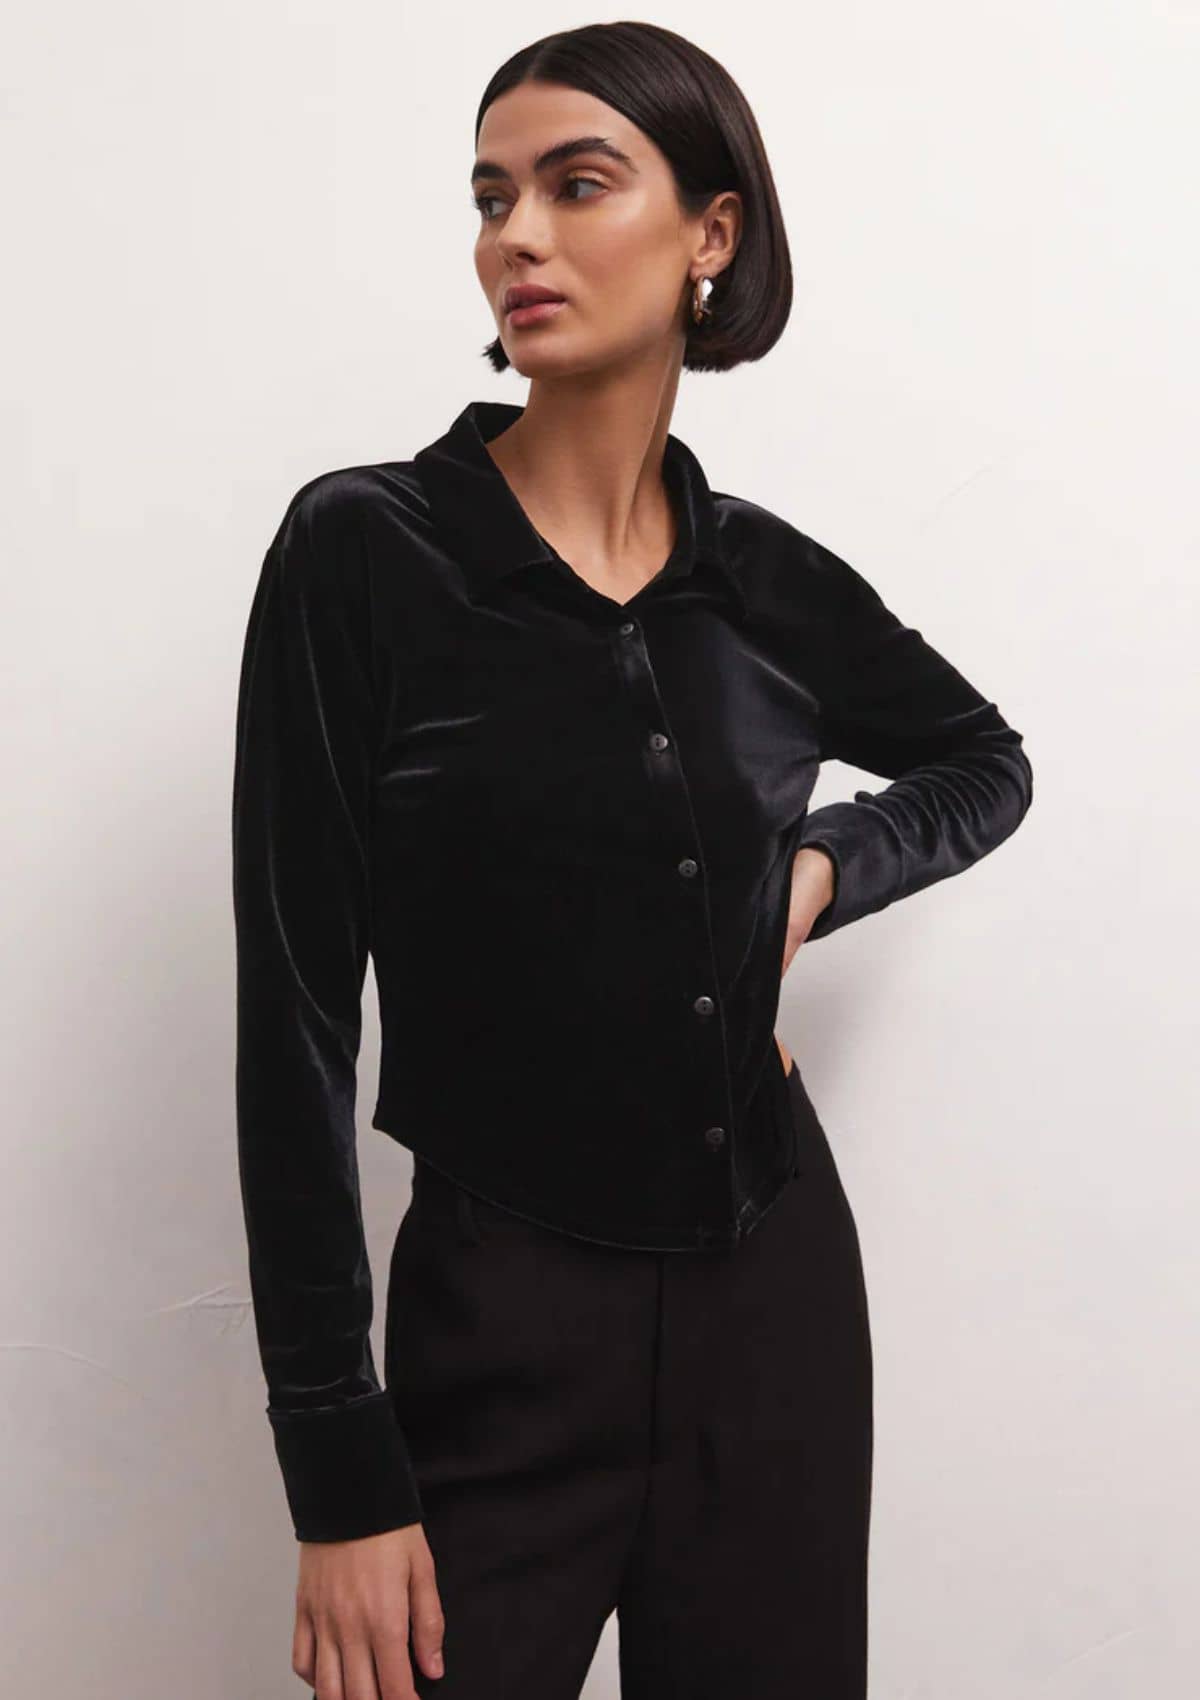 Women's black velvet button up collared top.